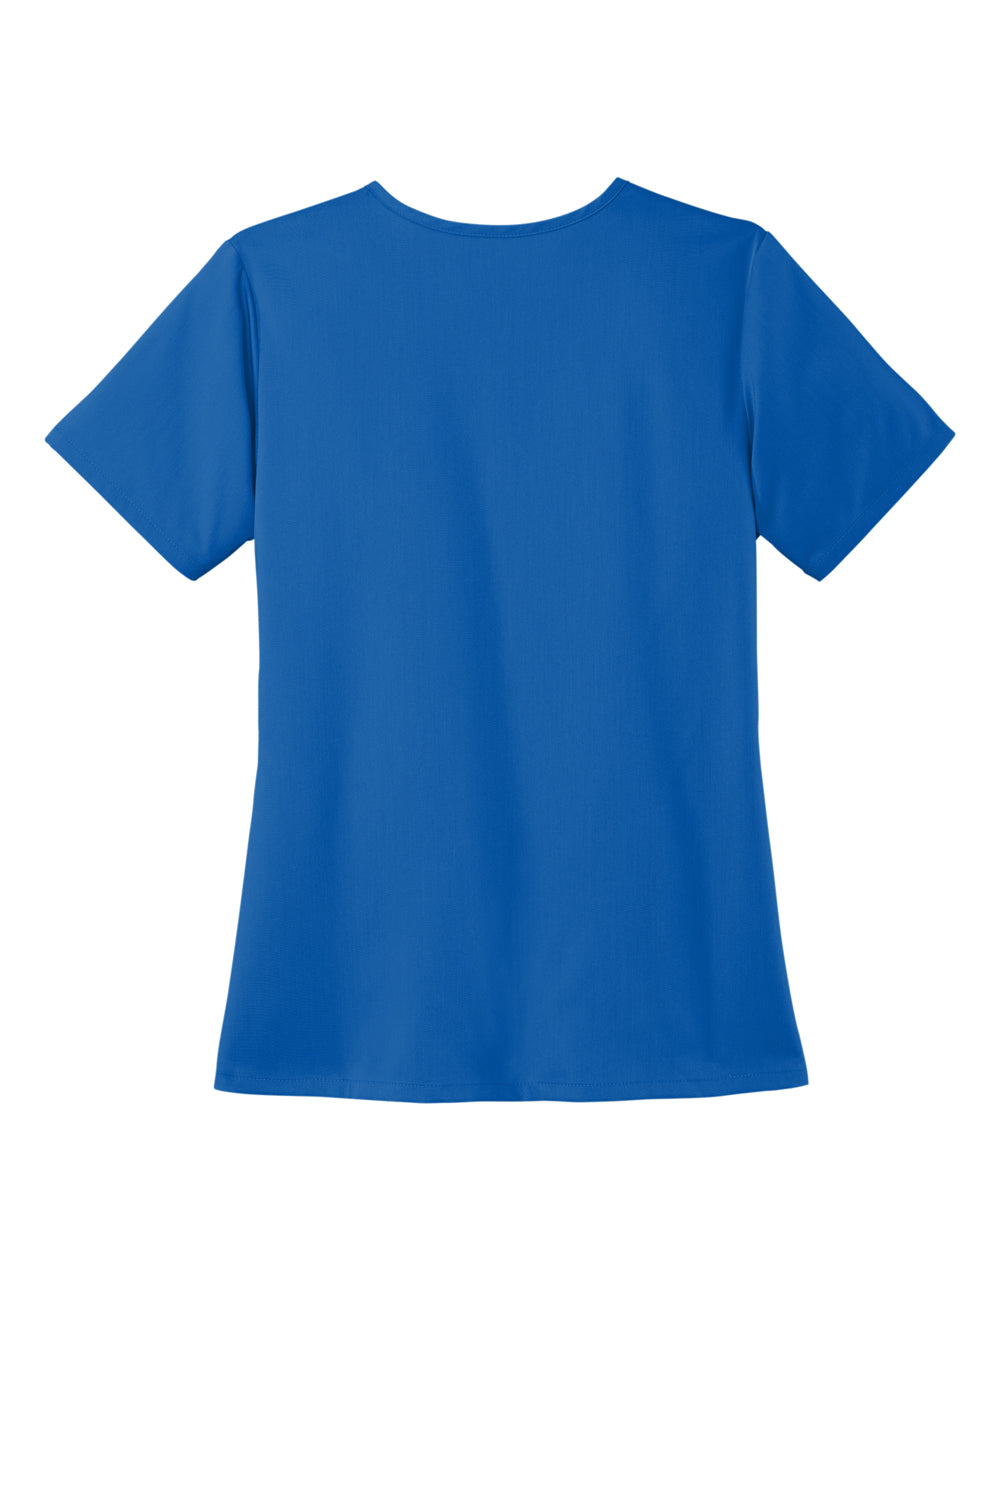 Wonderwink WW4168 Premiere Flex Short Sleeve V-Neck Shirt w/ Pockets Royal Blue Flat Back